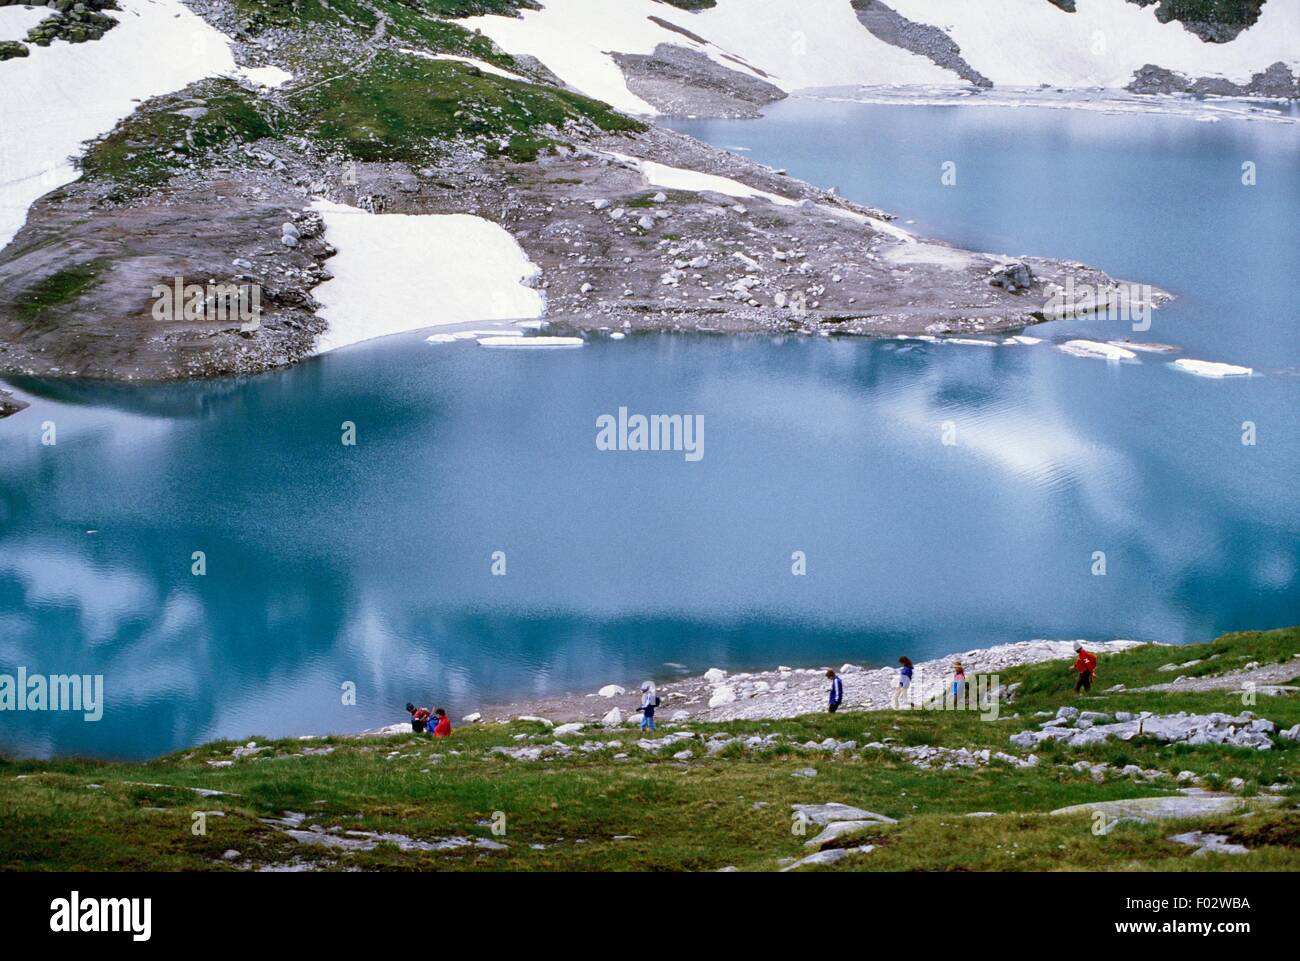 Weisssee lago alpino, Alti Tauri Parco Nazionale (Nationalpark Hohe Tauern), Austria. Foto Stock